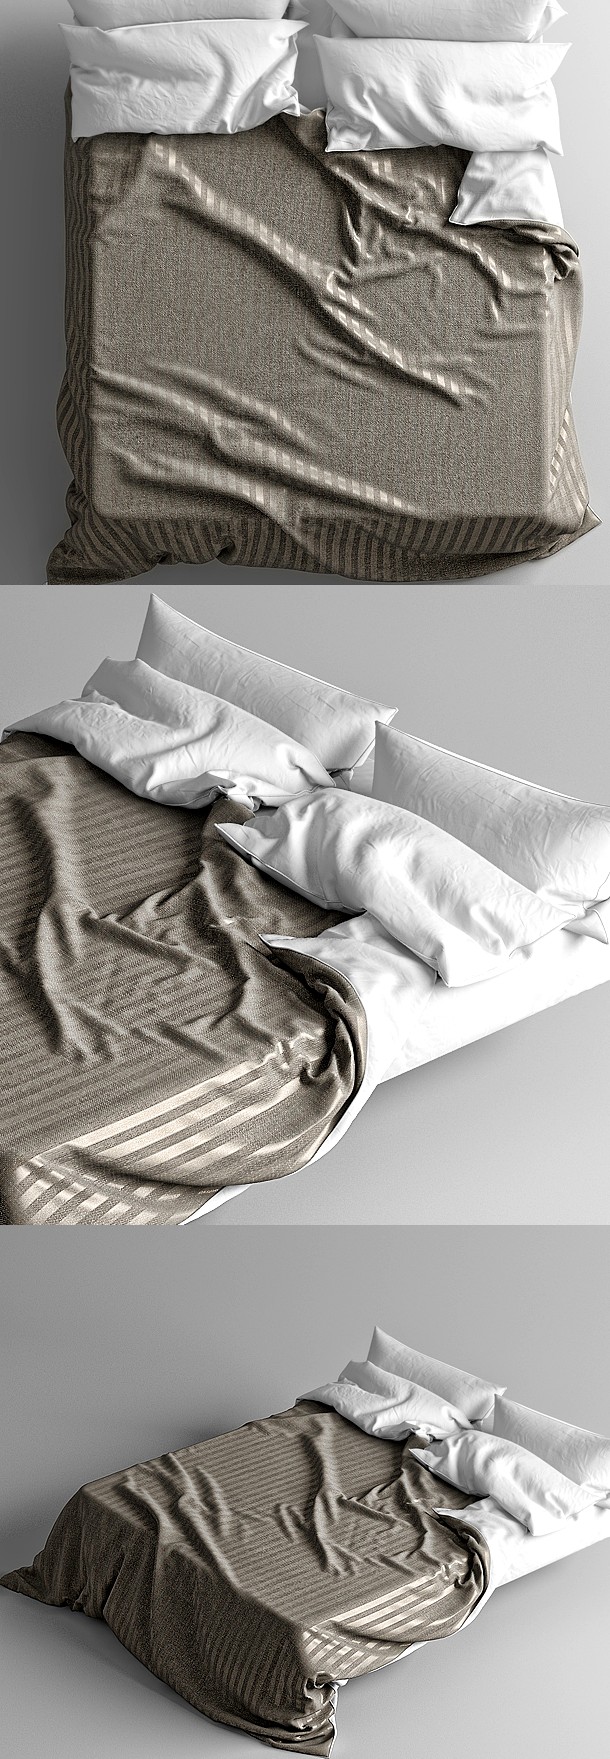 Bedclothes #3